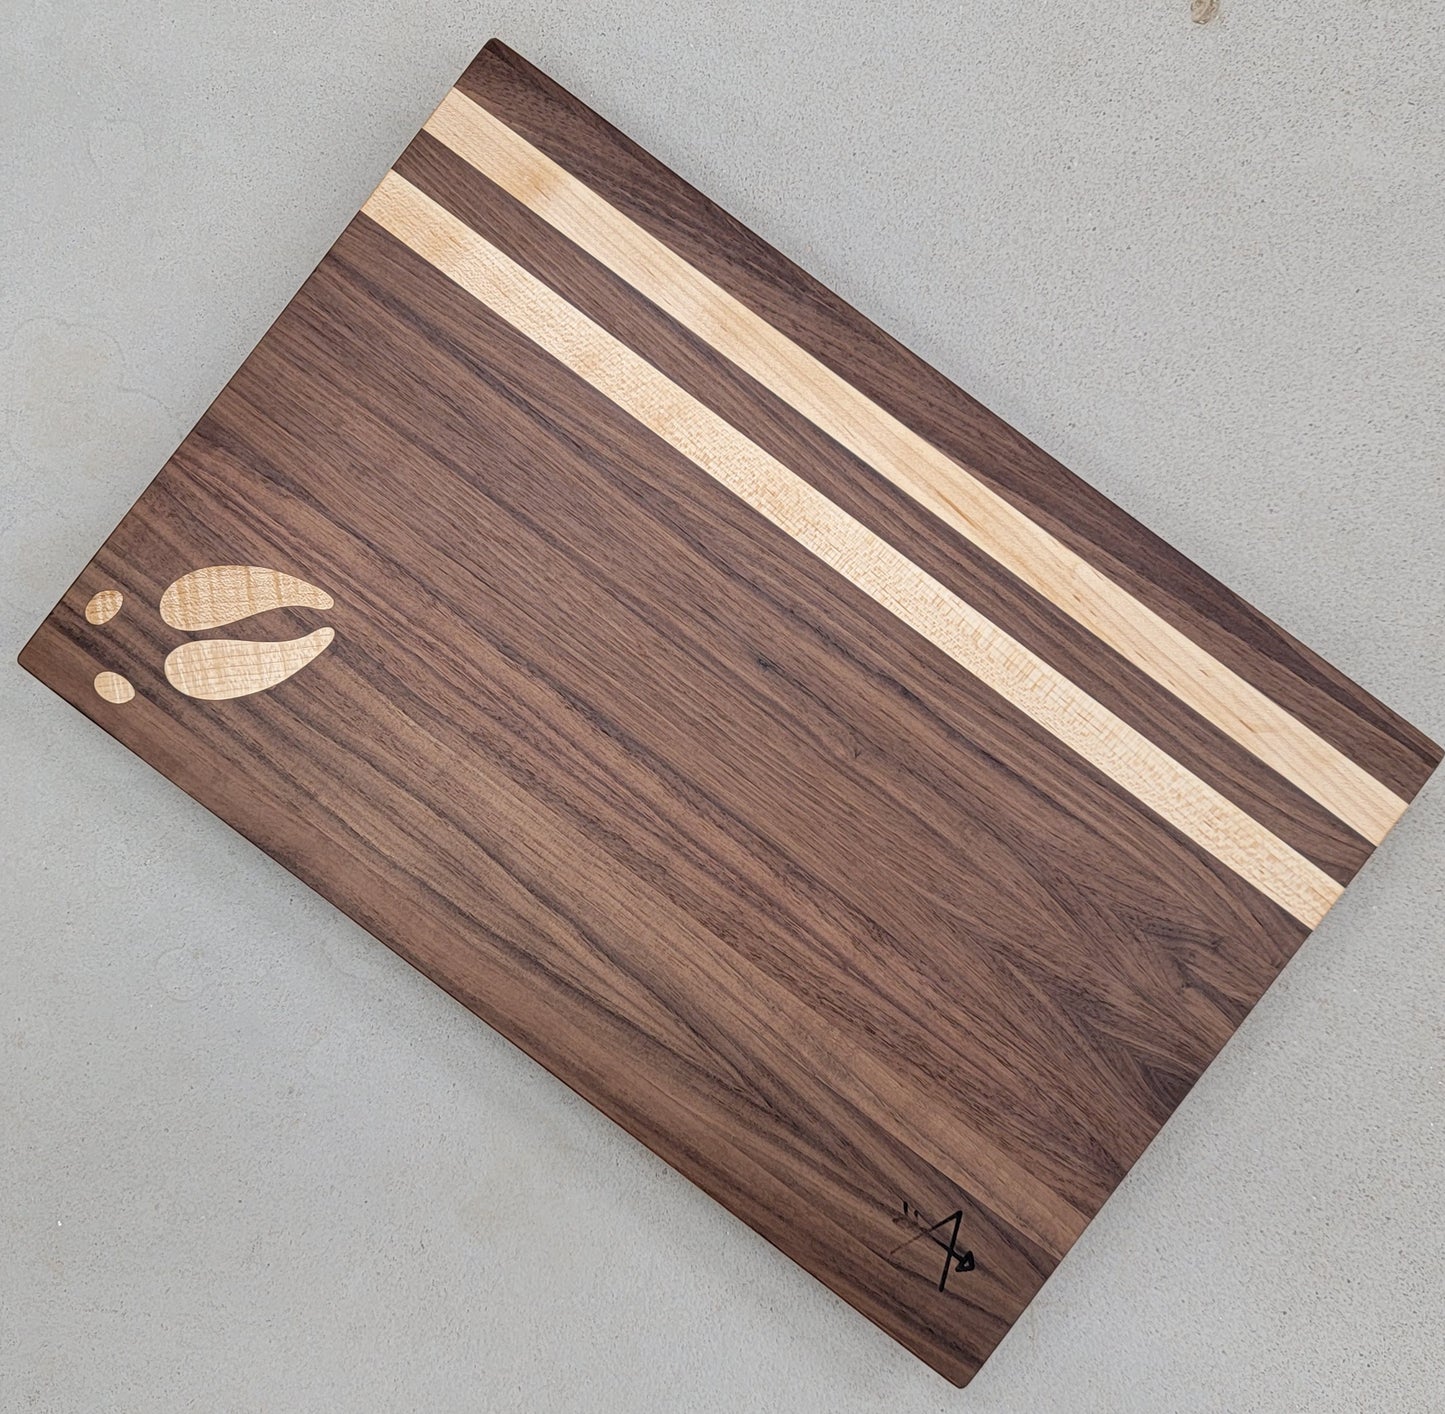 " Moose " Walnut and Maple Wood Cutting Board